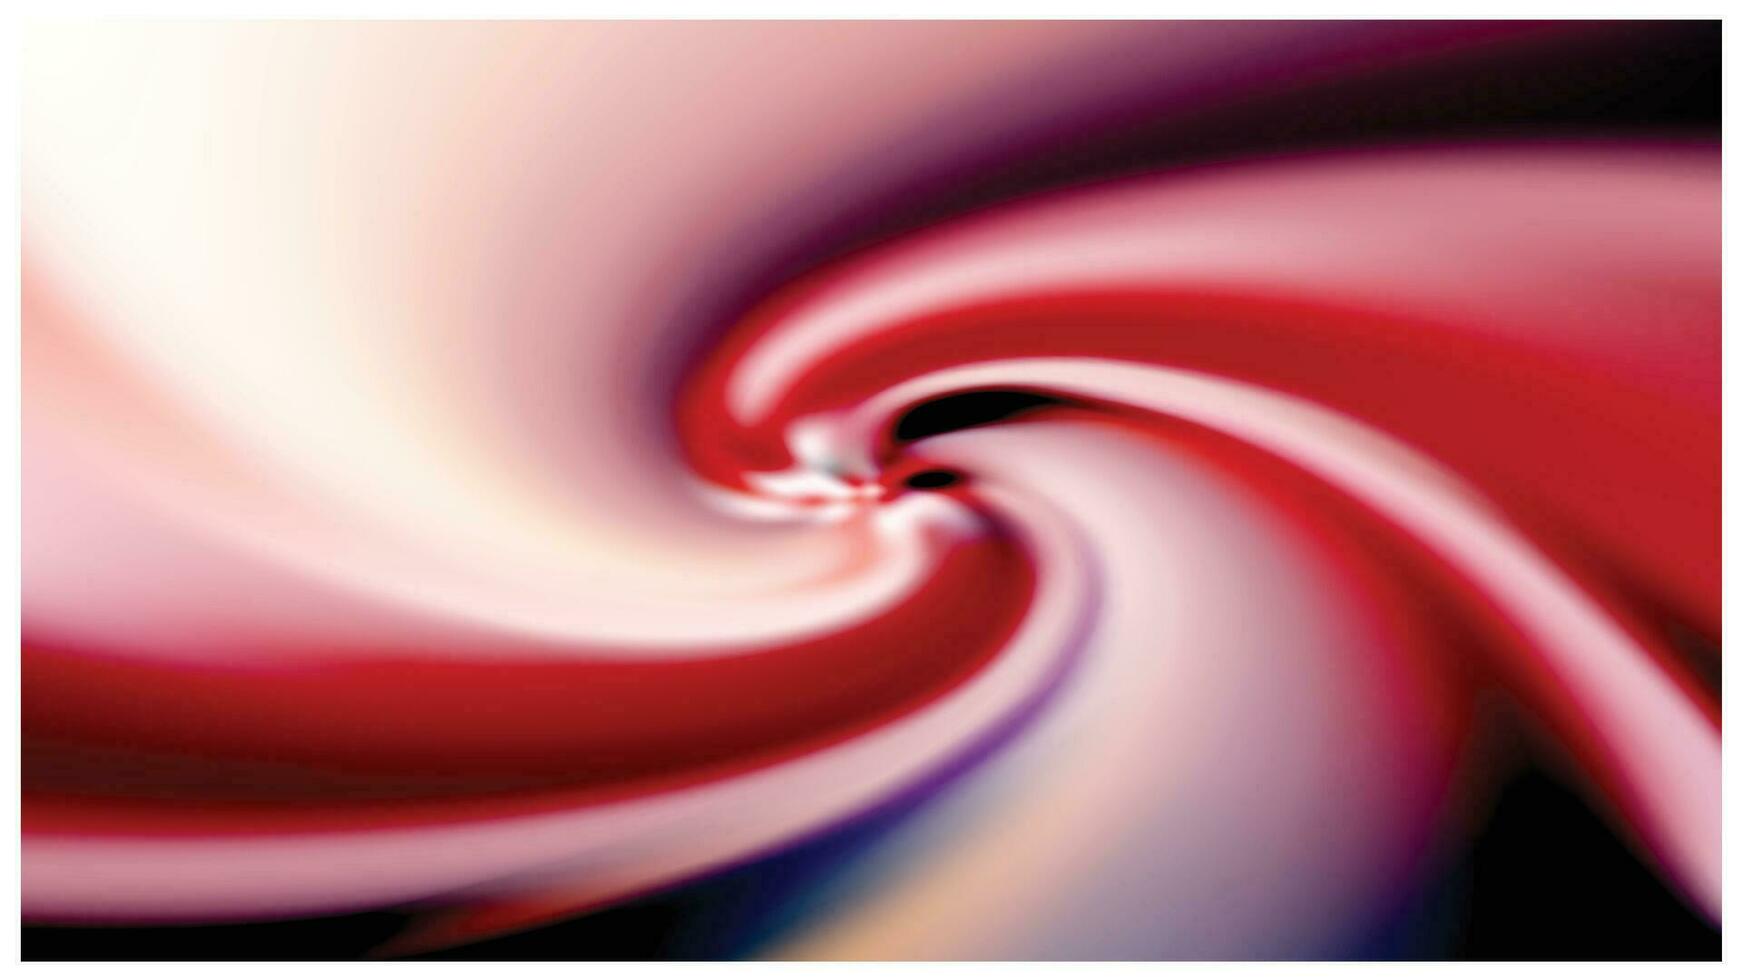 resumen -rosa rojo antecedentes -degradado antecedentes espiral onda de giro vistoso efecto para fondo, ilustración degradado en agua color Arte remolino arco iris y dulce color concepto vector